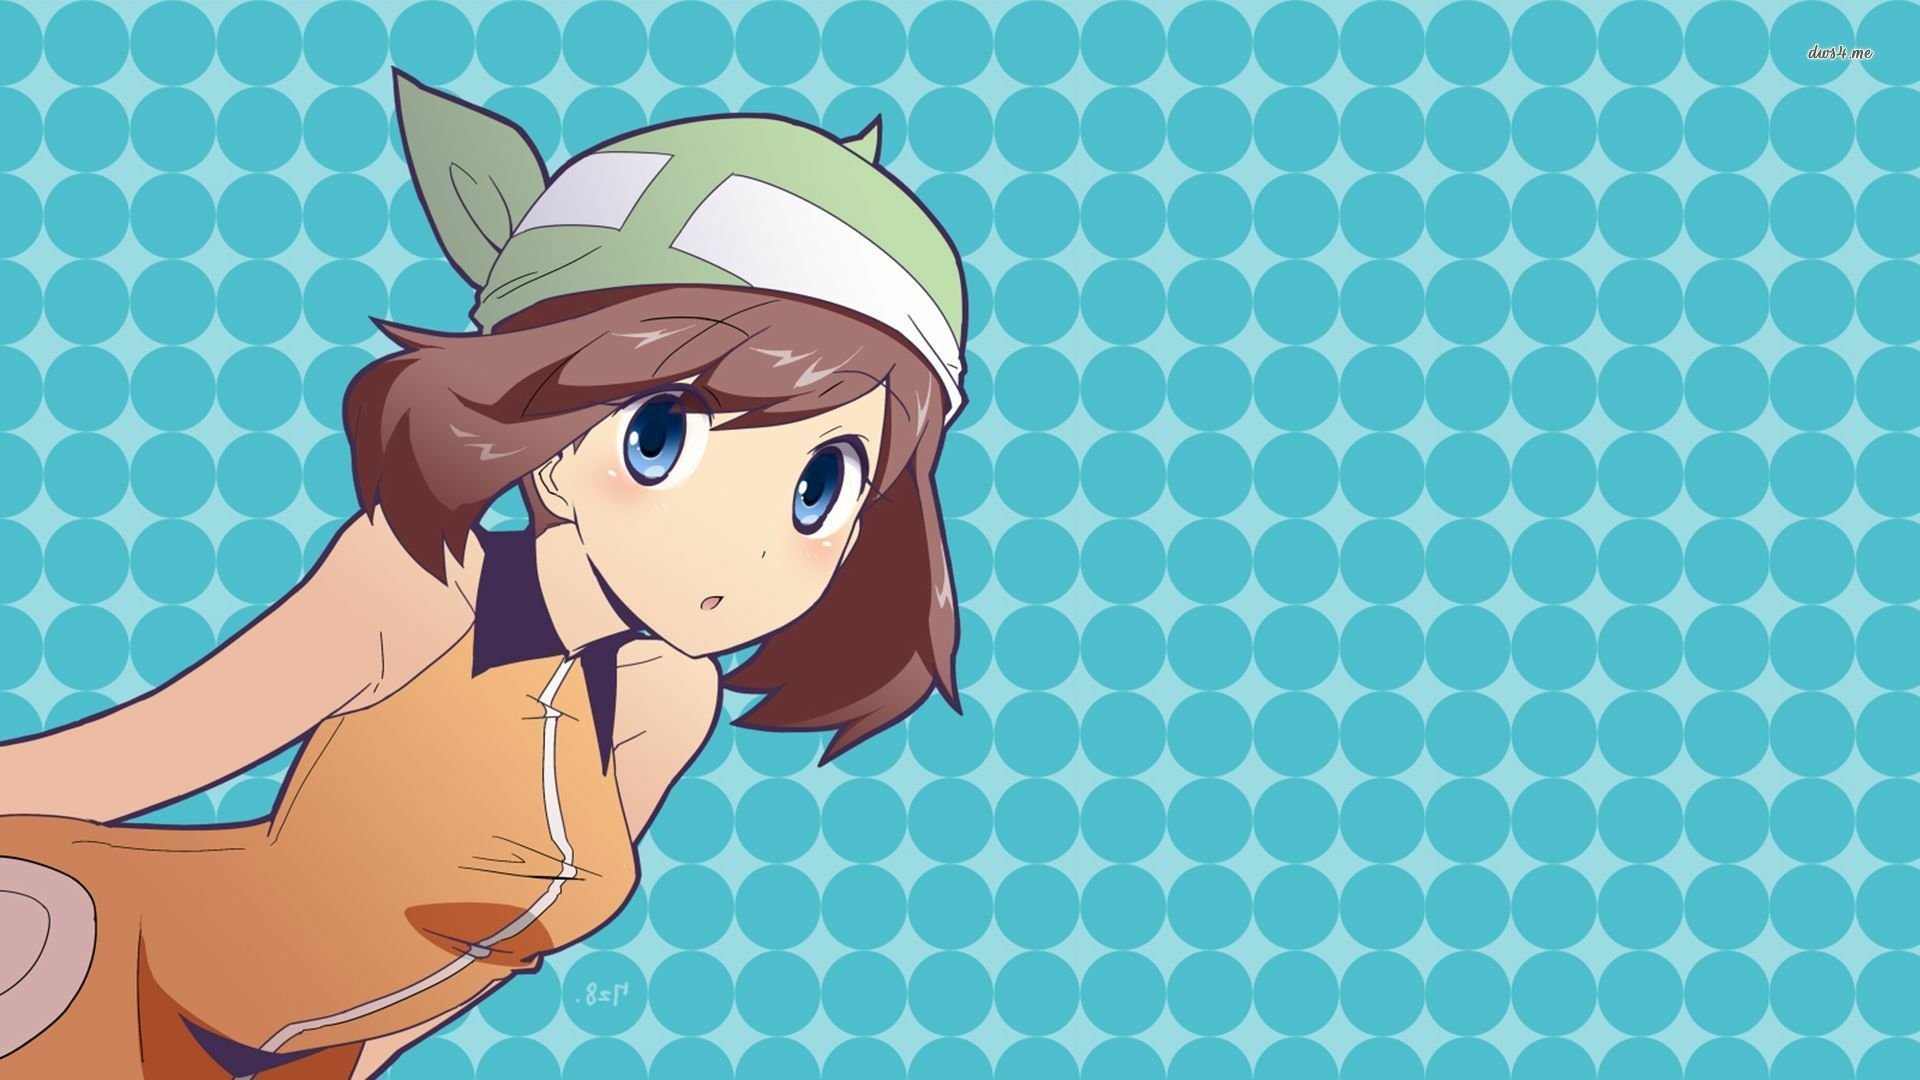 1920x1080 Pokémon Wallpaper Background Image. 